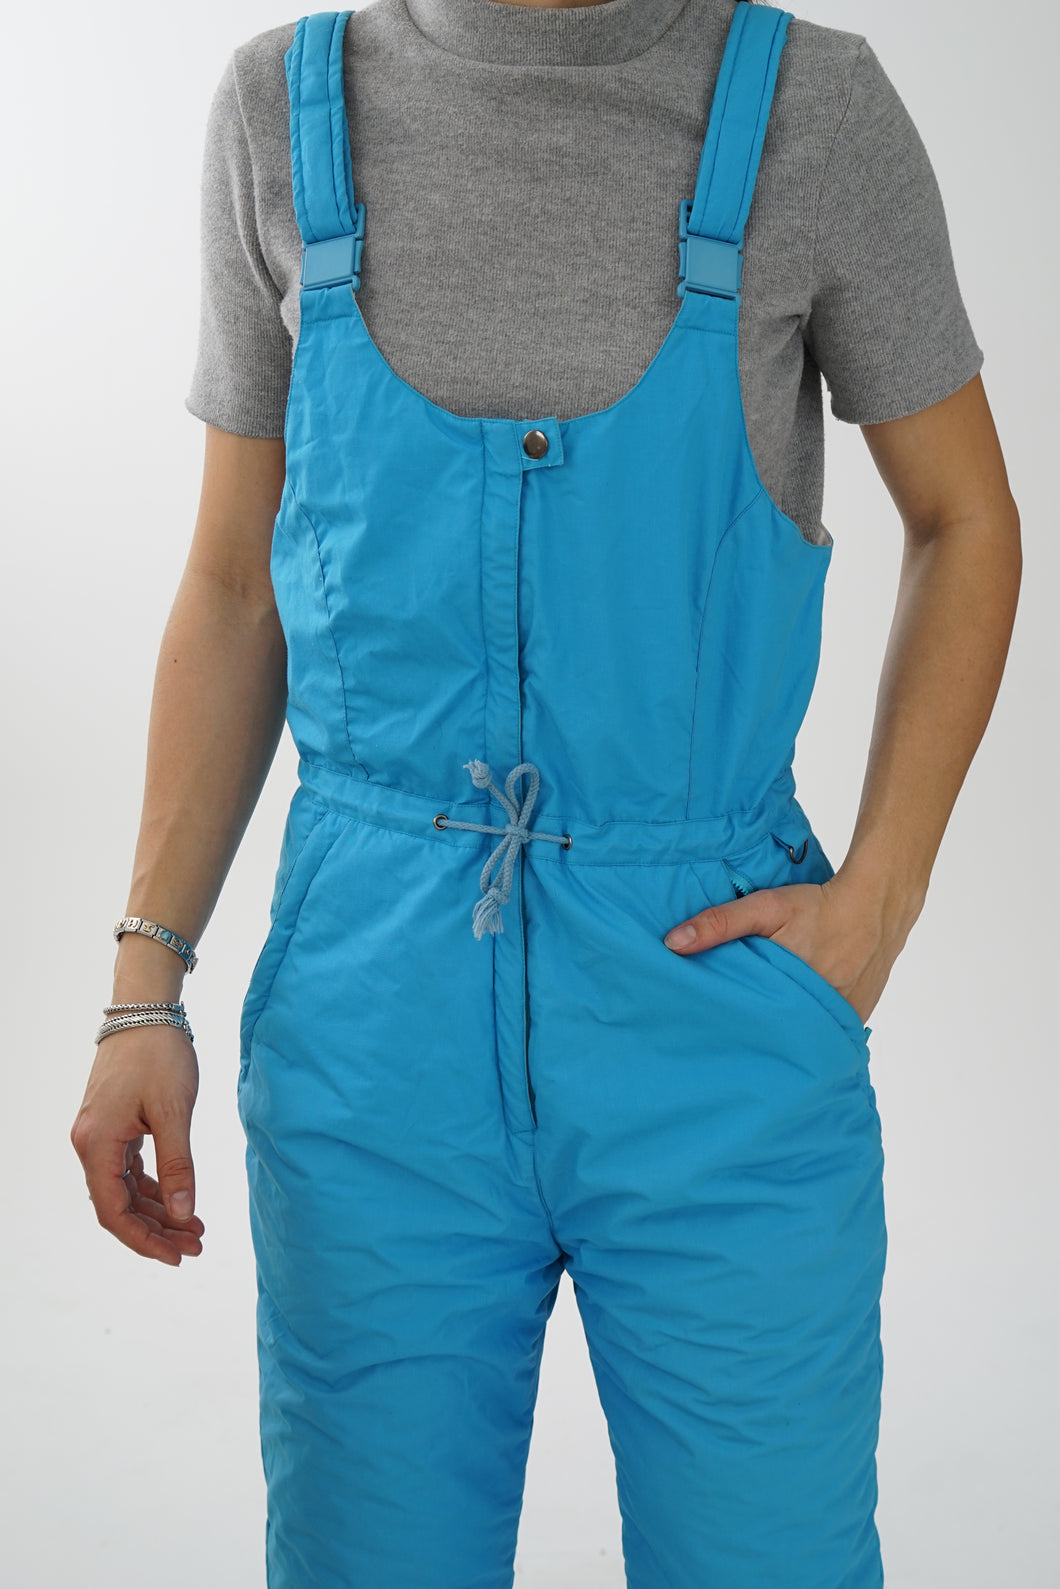 Vintage light blue overalls snow pants for women size 10 (S)